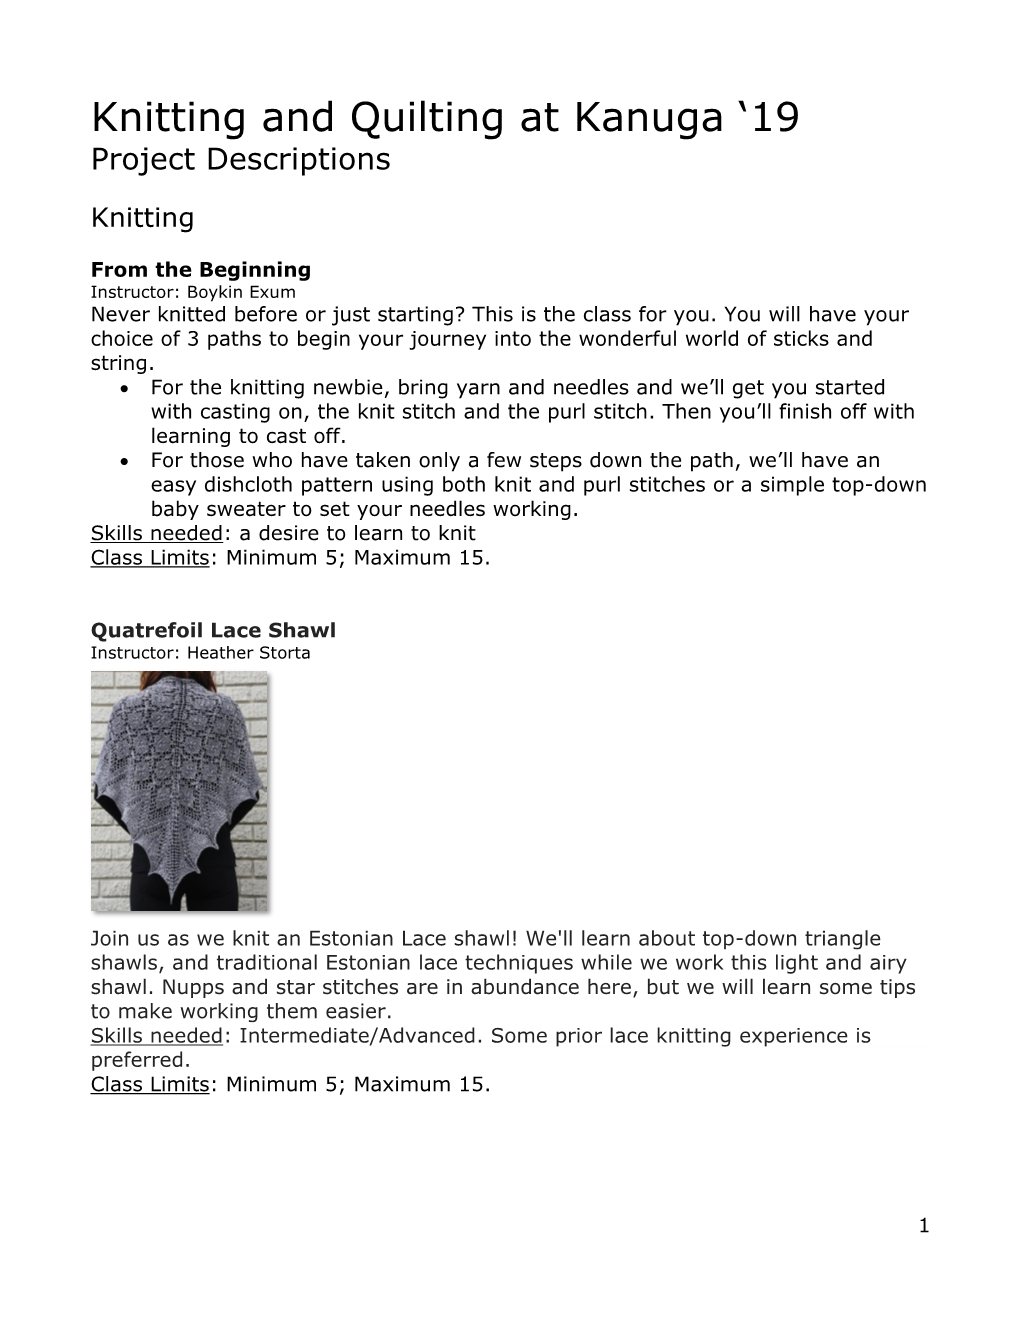 Knitting and Quilting at Kanuga ‘19 Project Descriptions